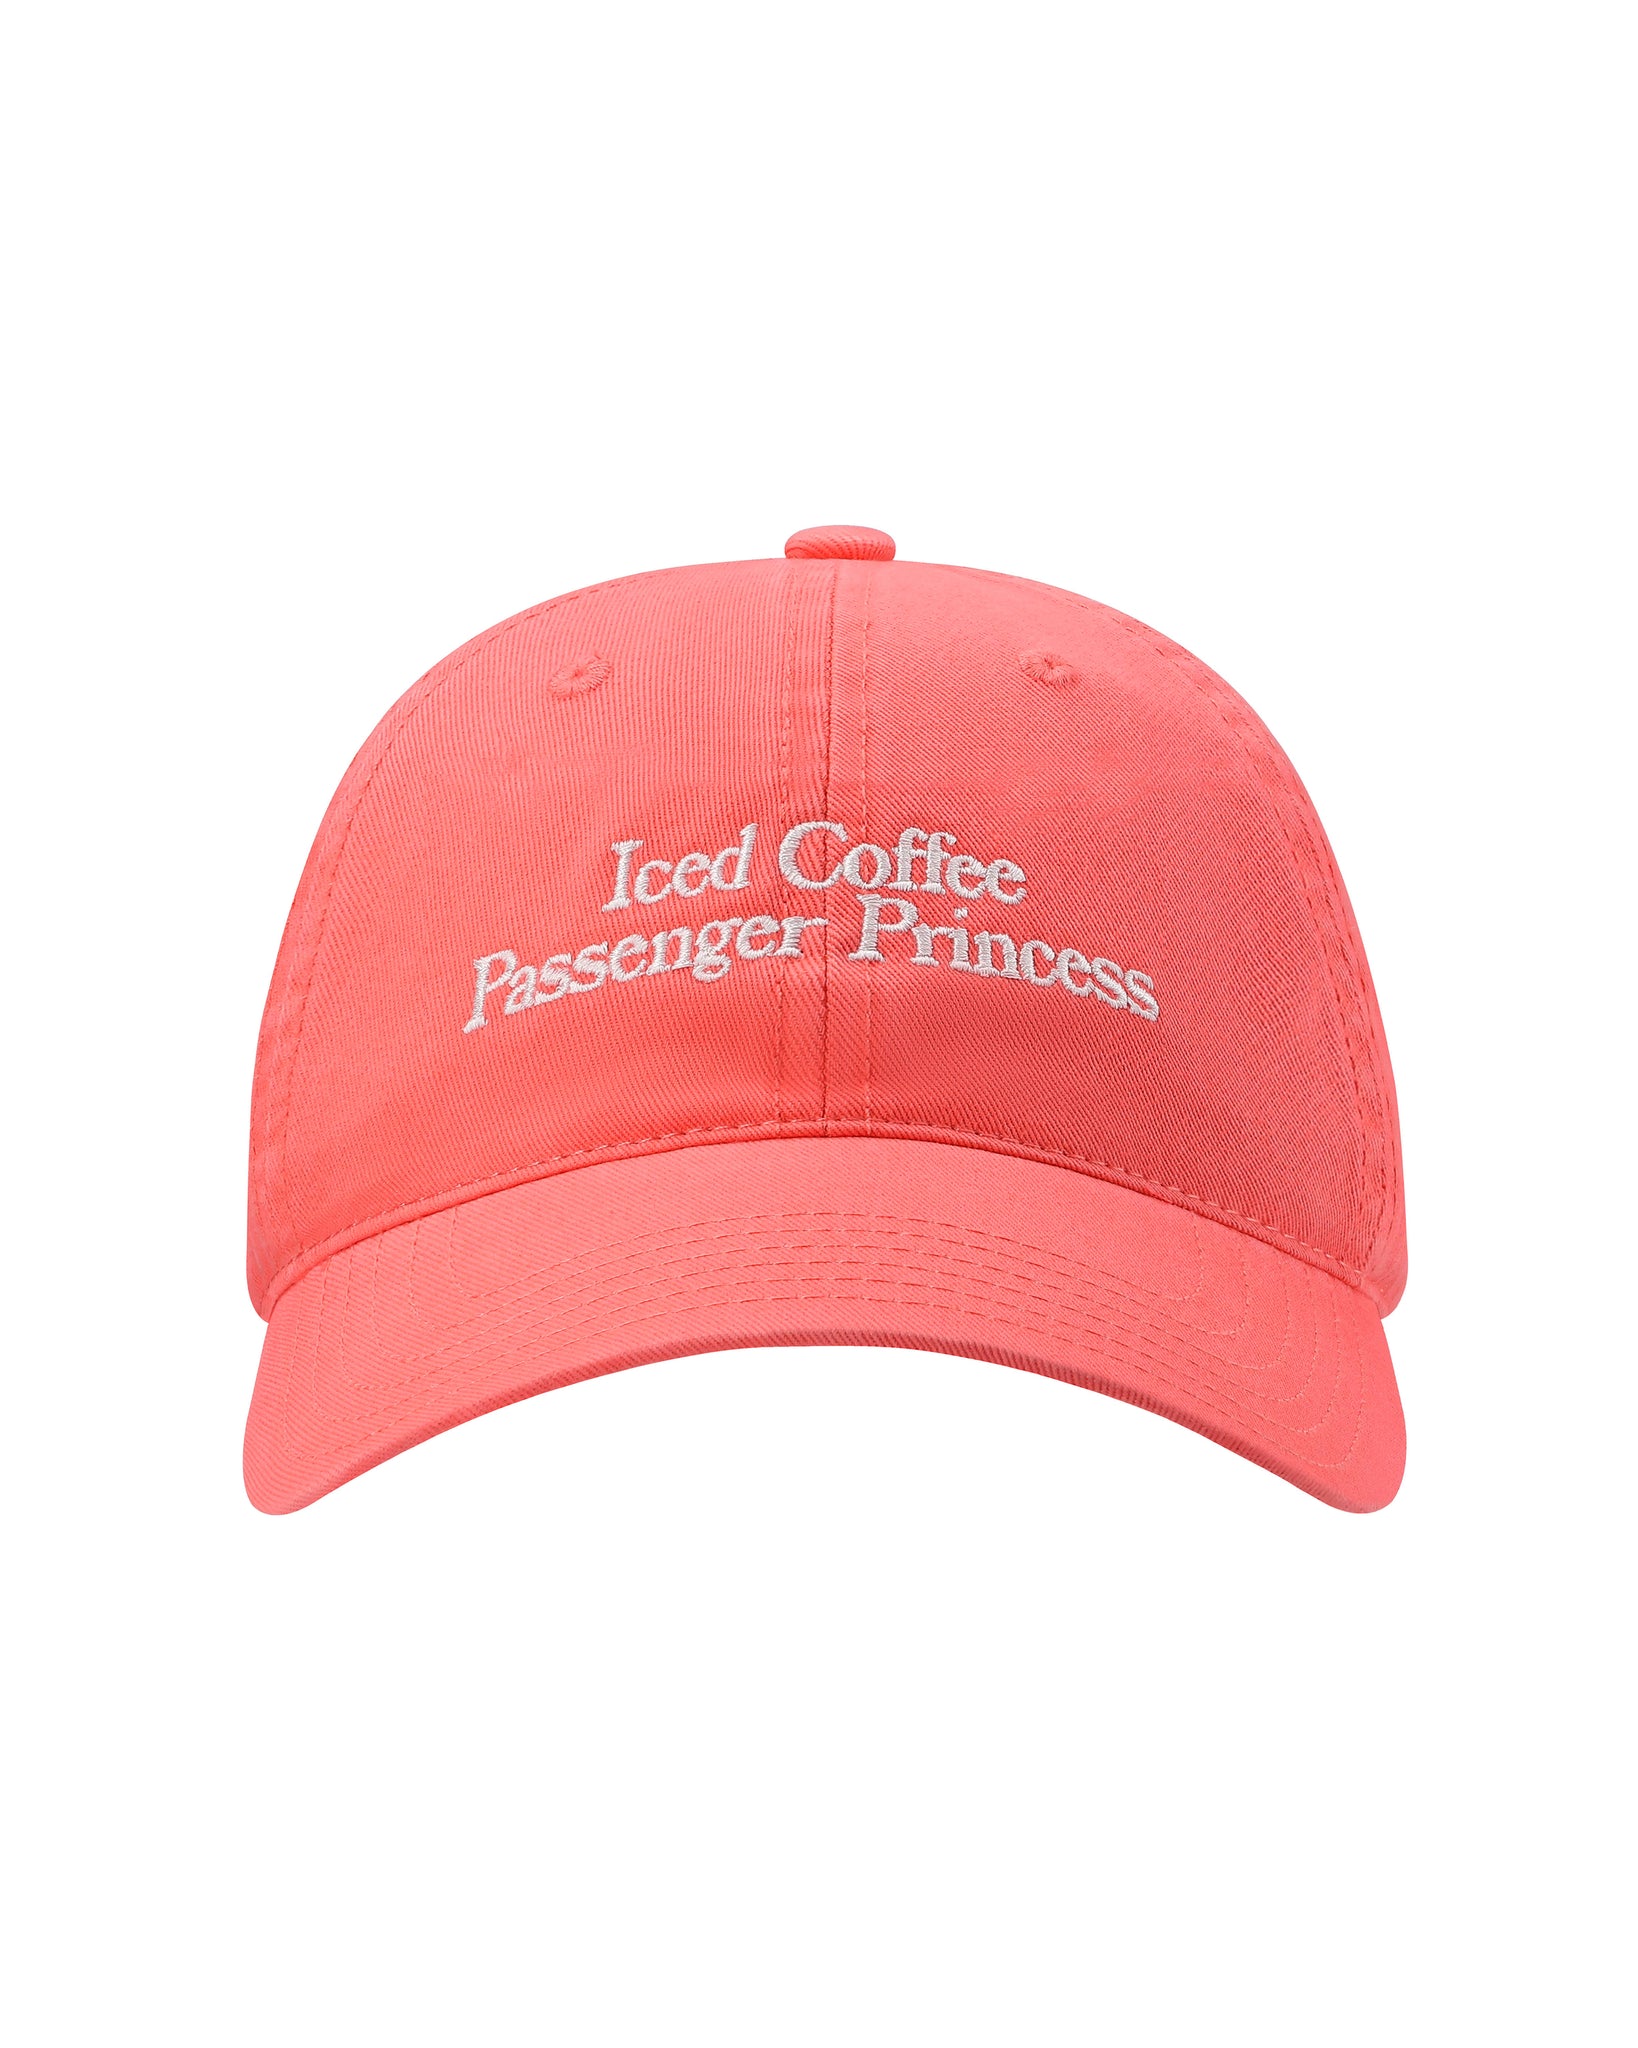 Iced Coffee Passenger Princess Cap